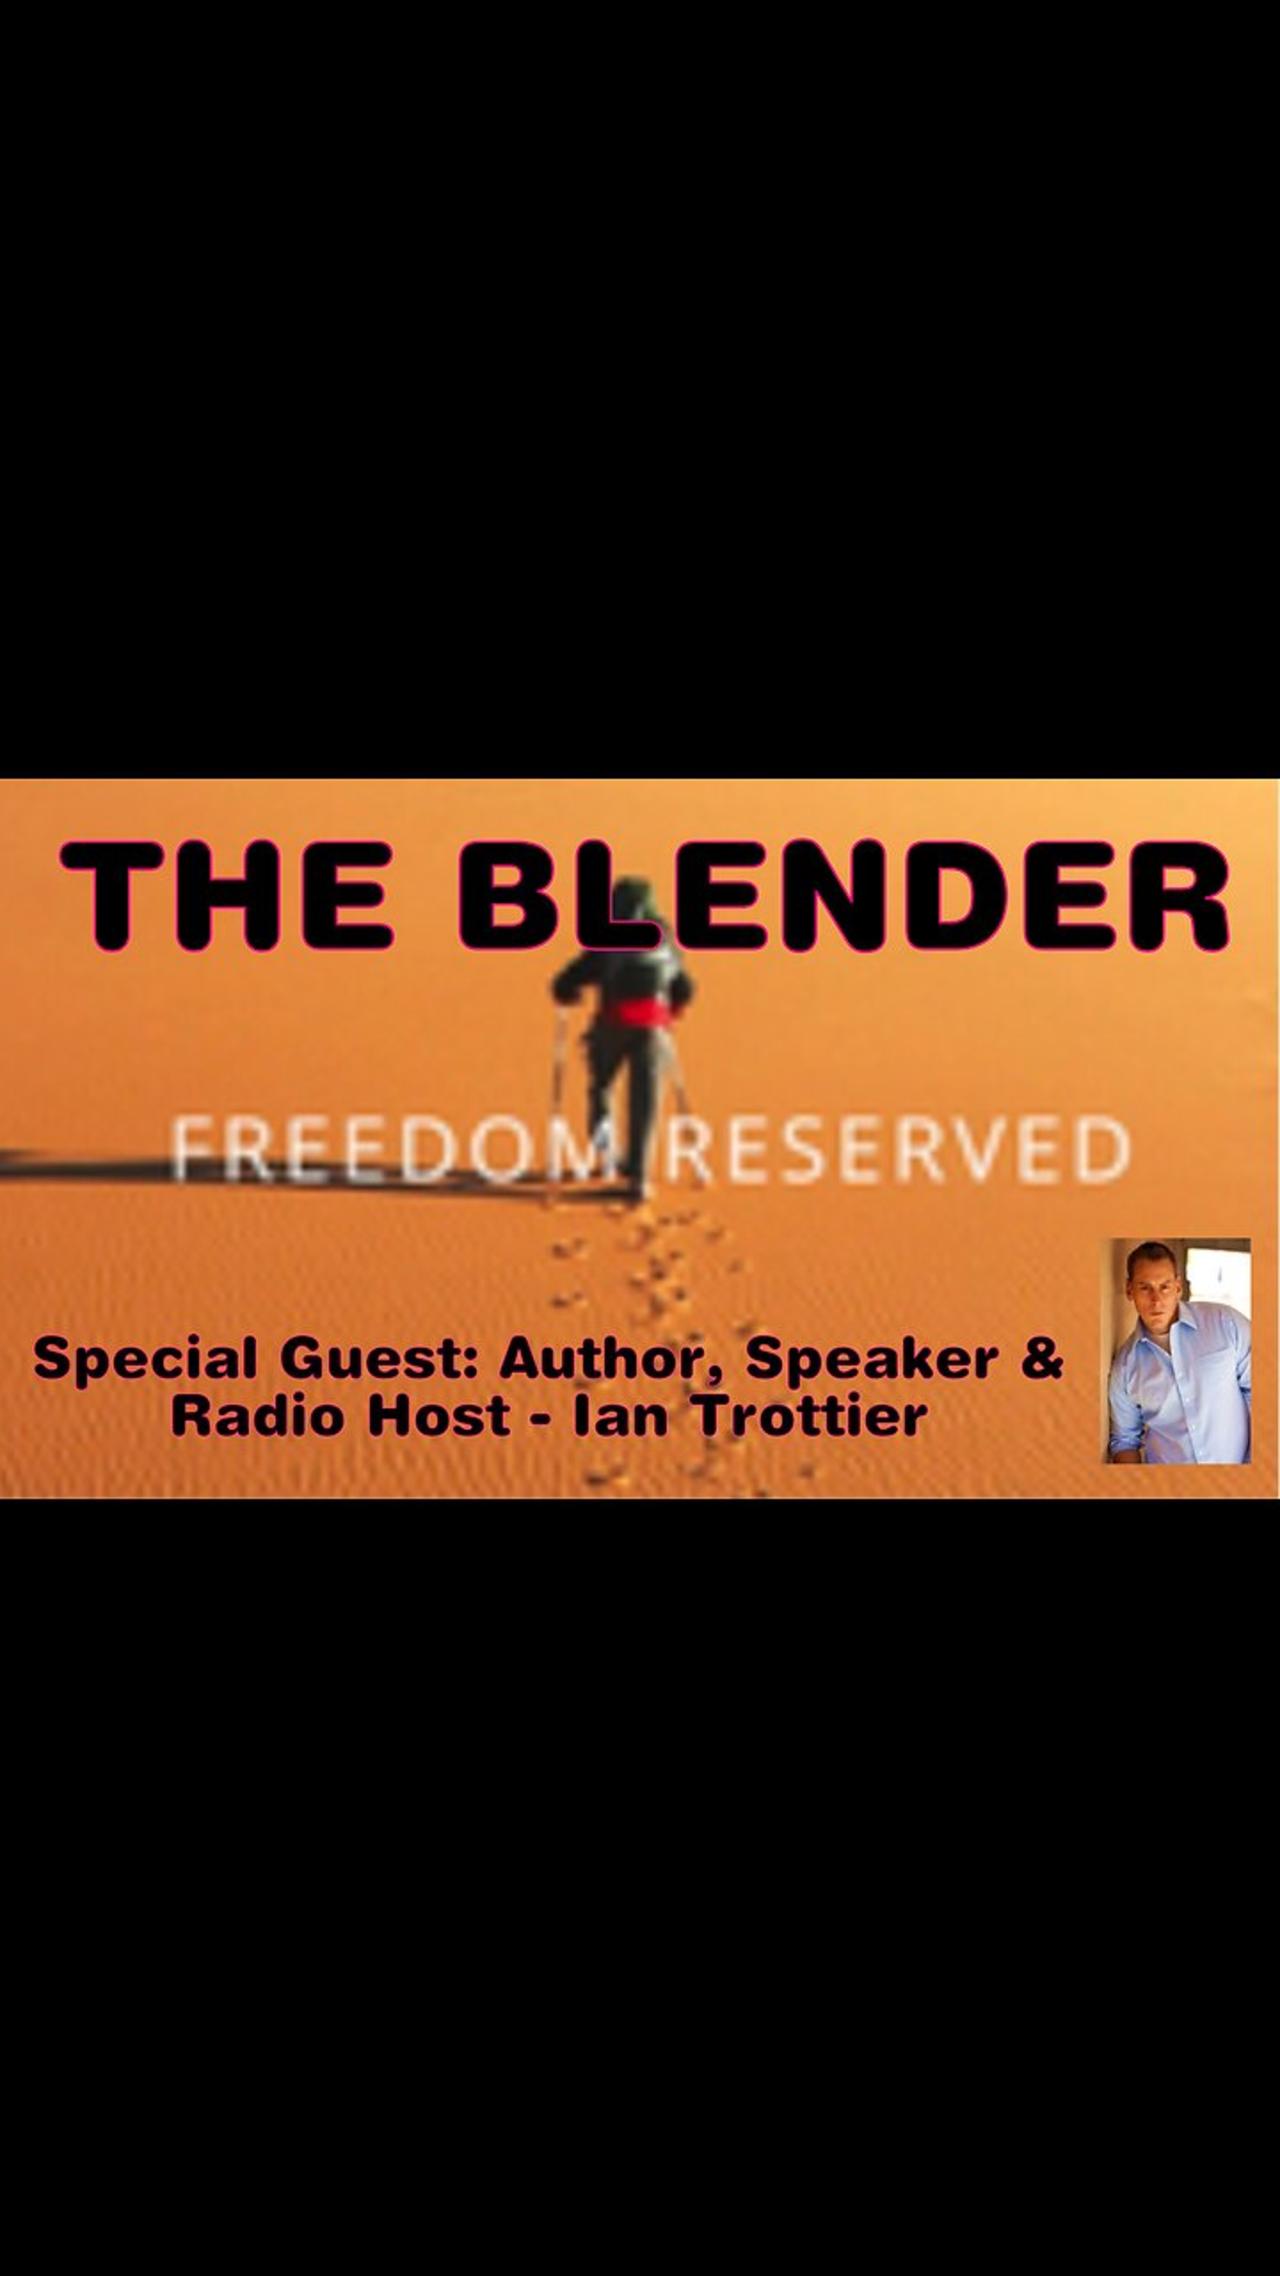 THE BLENDER w/ Special Guest: Author, Speaker & Talk Show Host - Ian Trottier